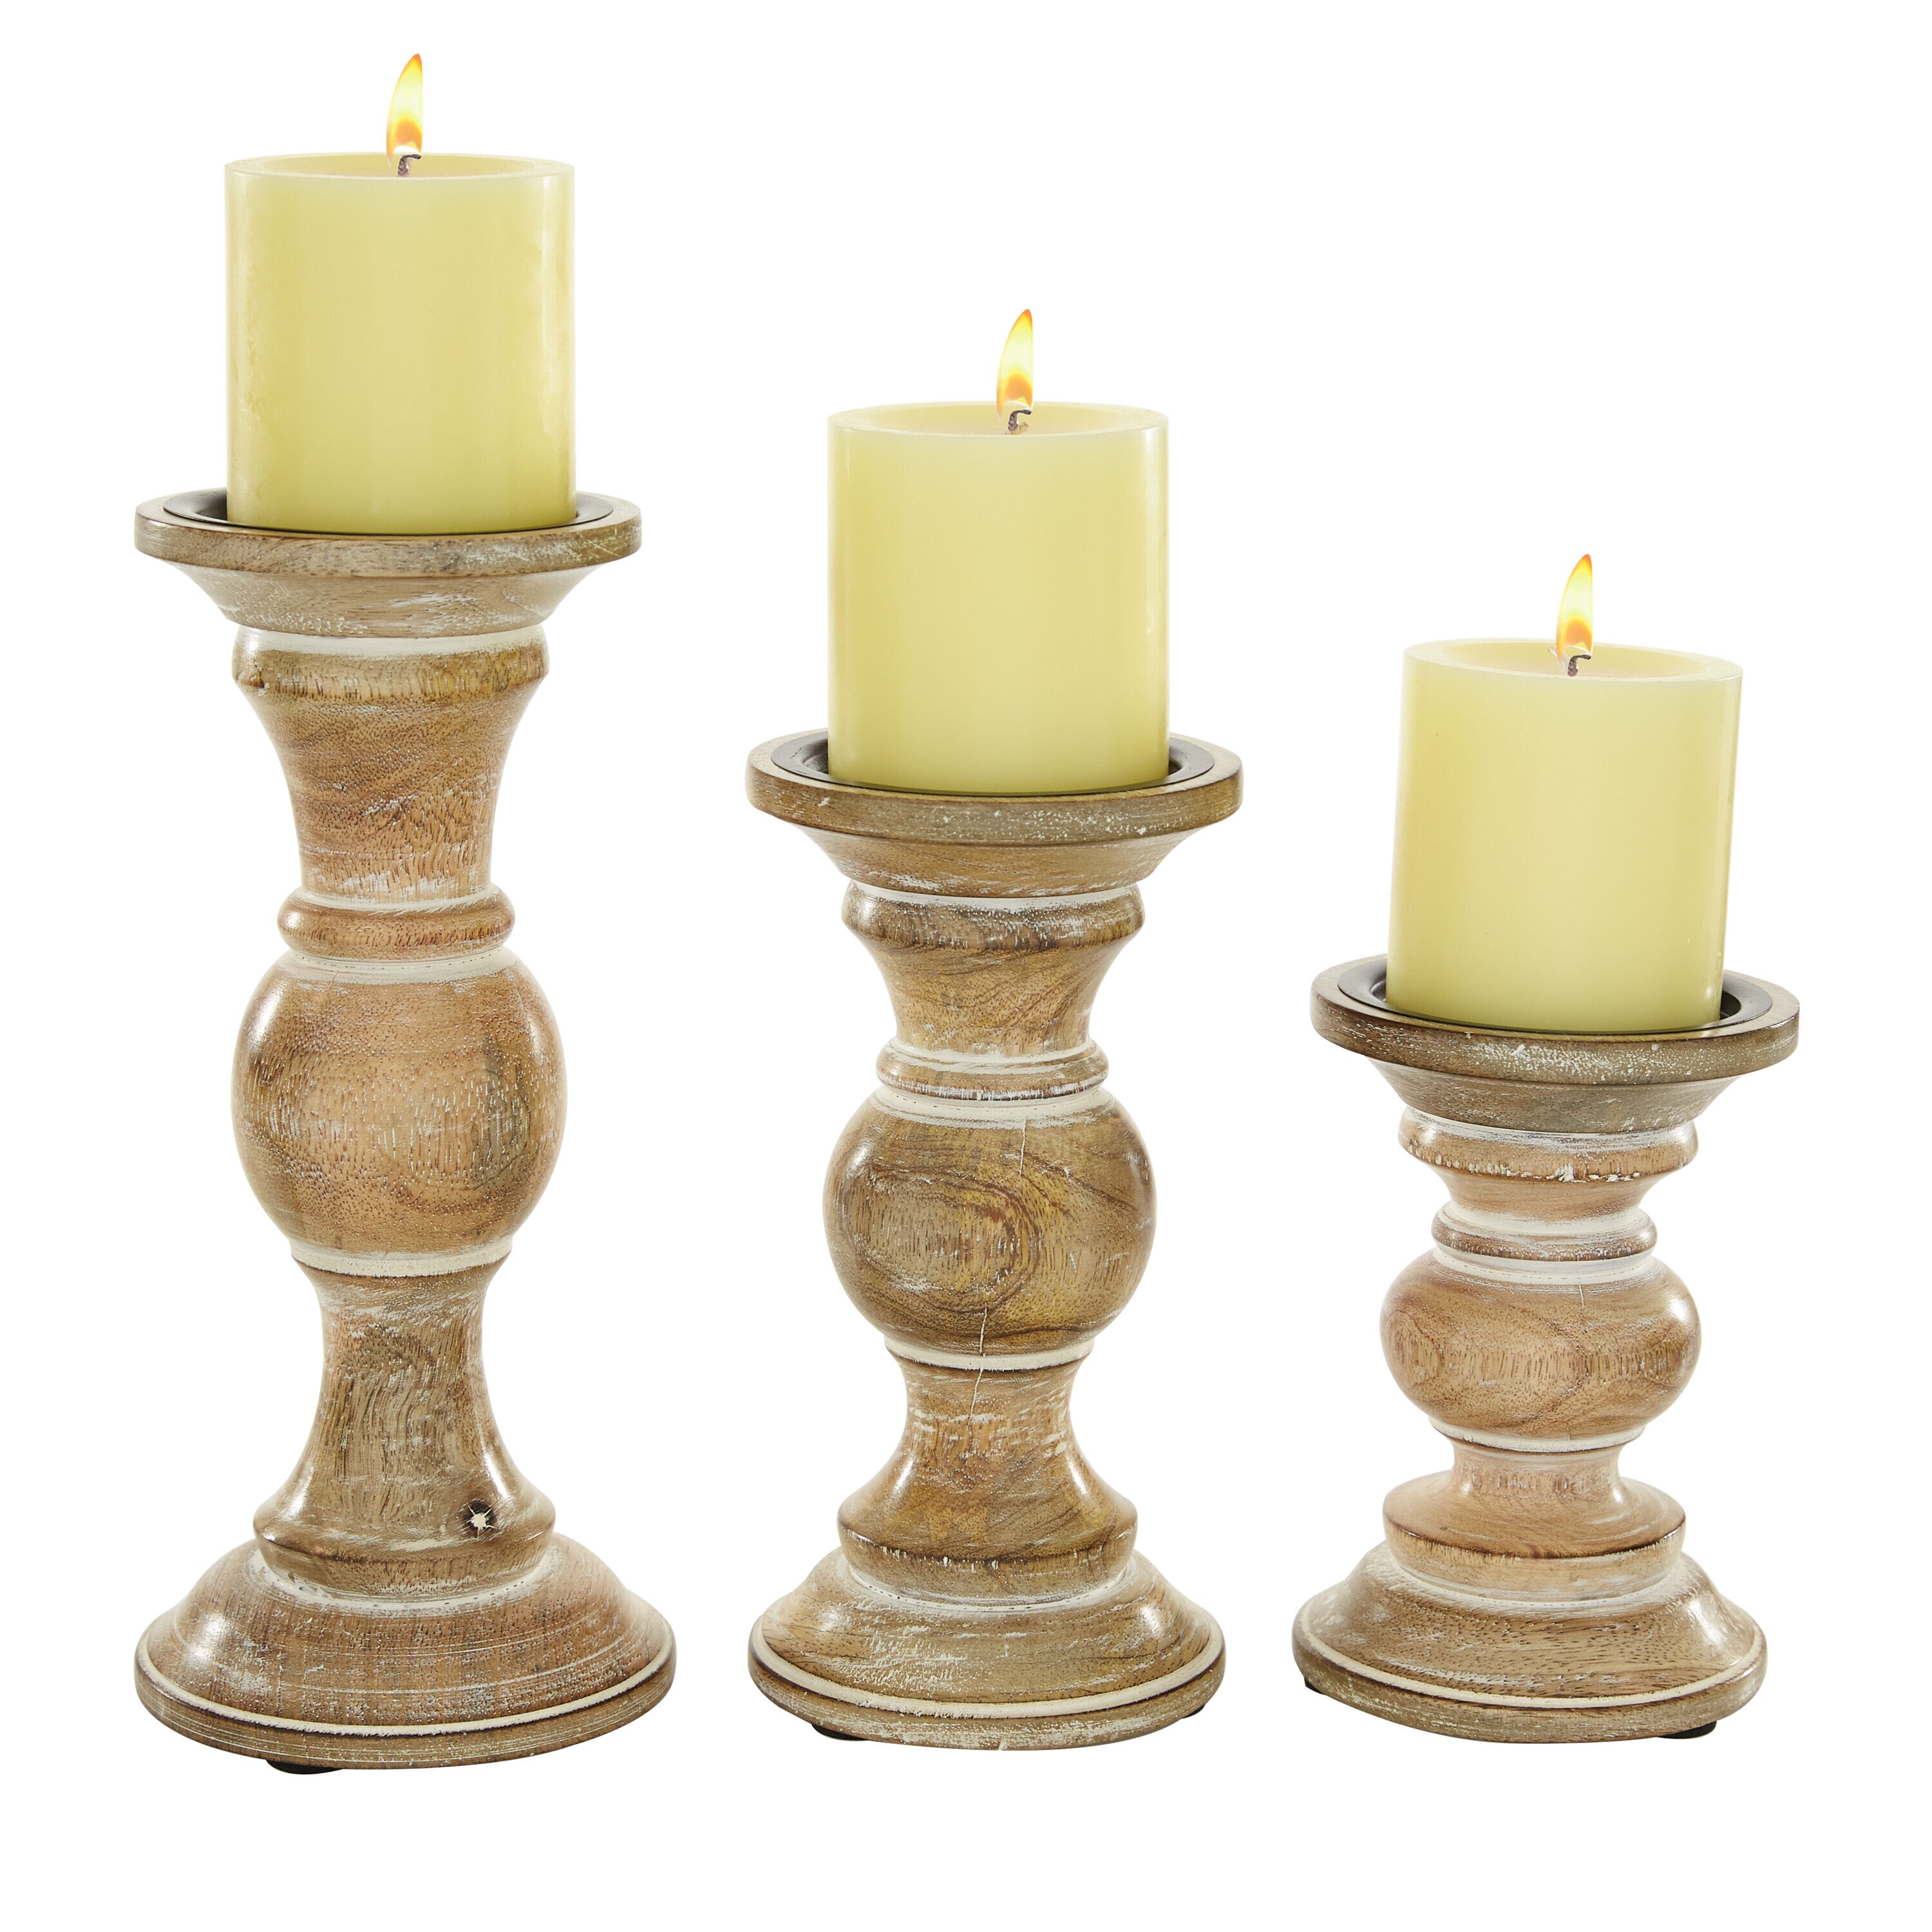 Grayson Lane 1-Candle Wood Pillar Candle Holders - Black - Set of